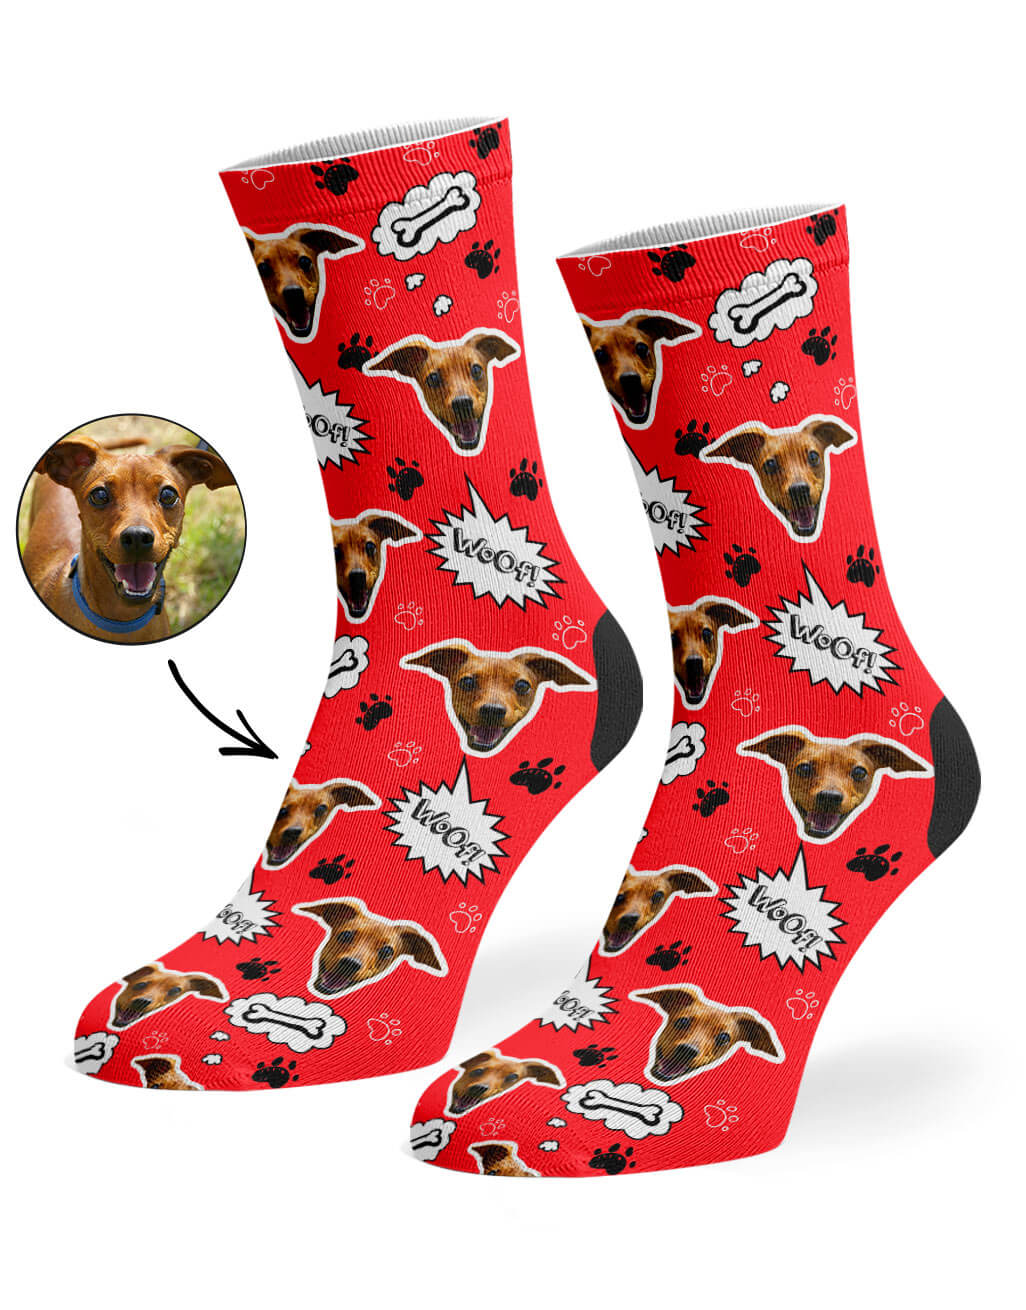 Your Dog Woof Printed On Socks